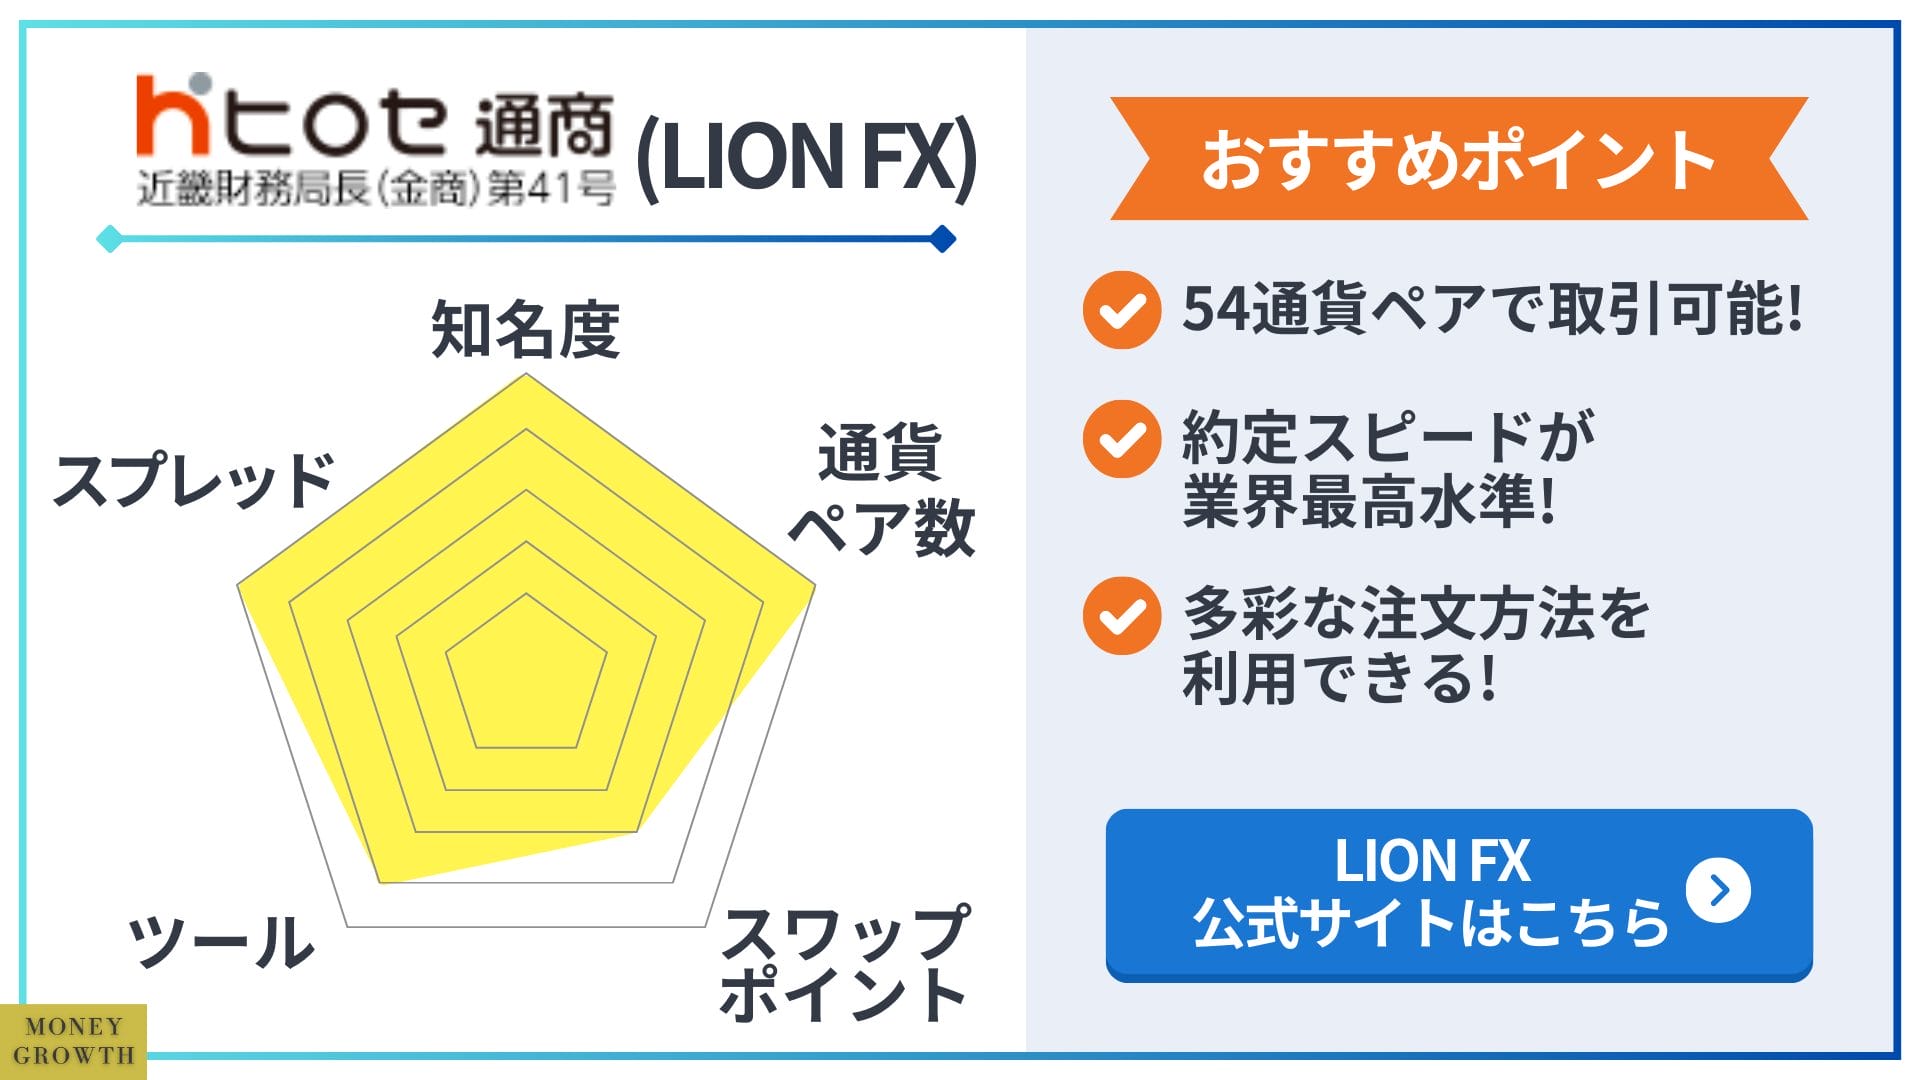 LION FX_スマホアプリ取引におすすめのFX会社3選_FXおすすめ